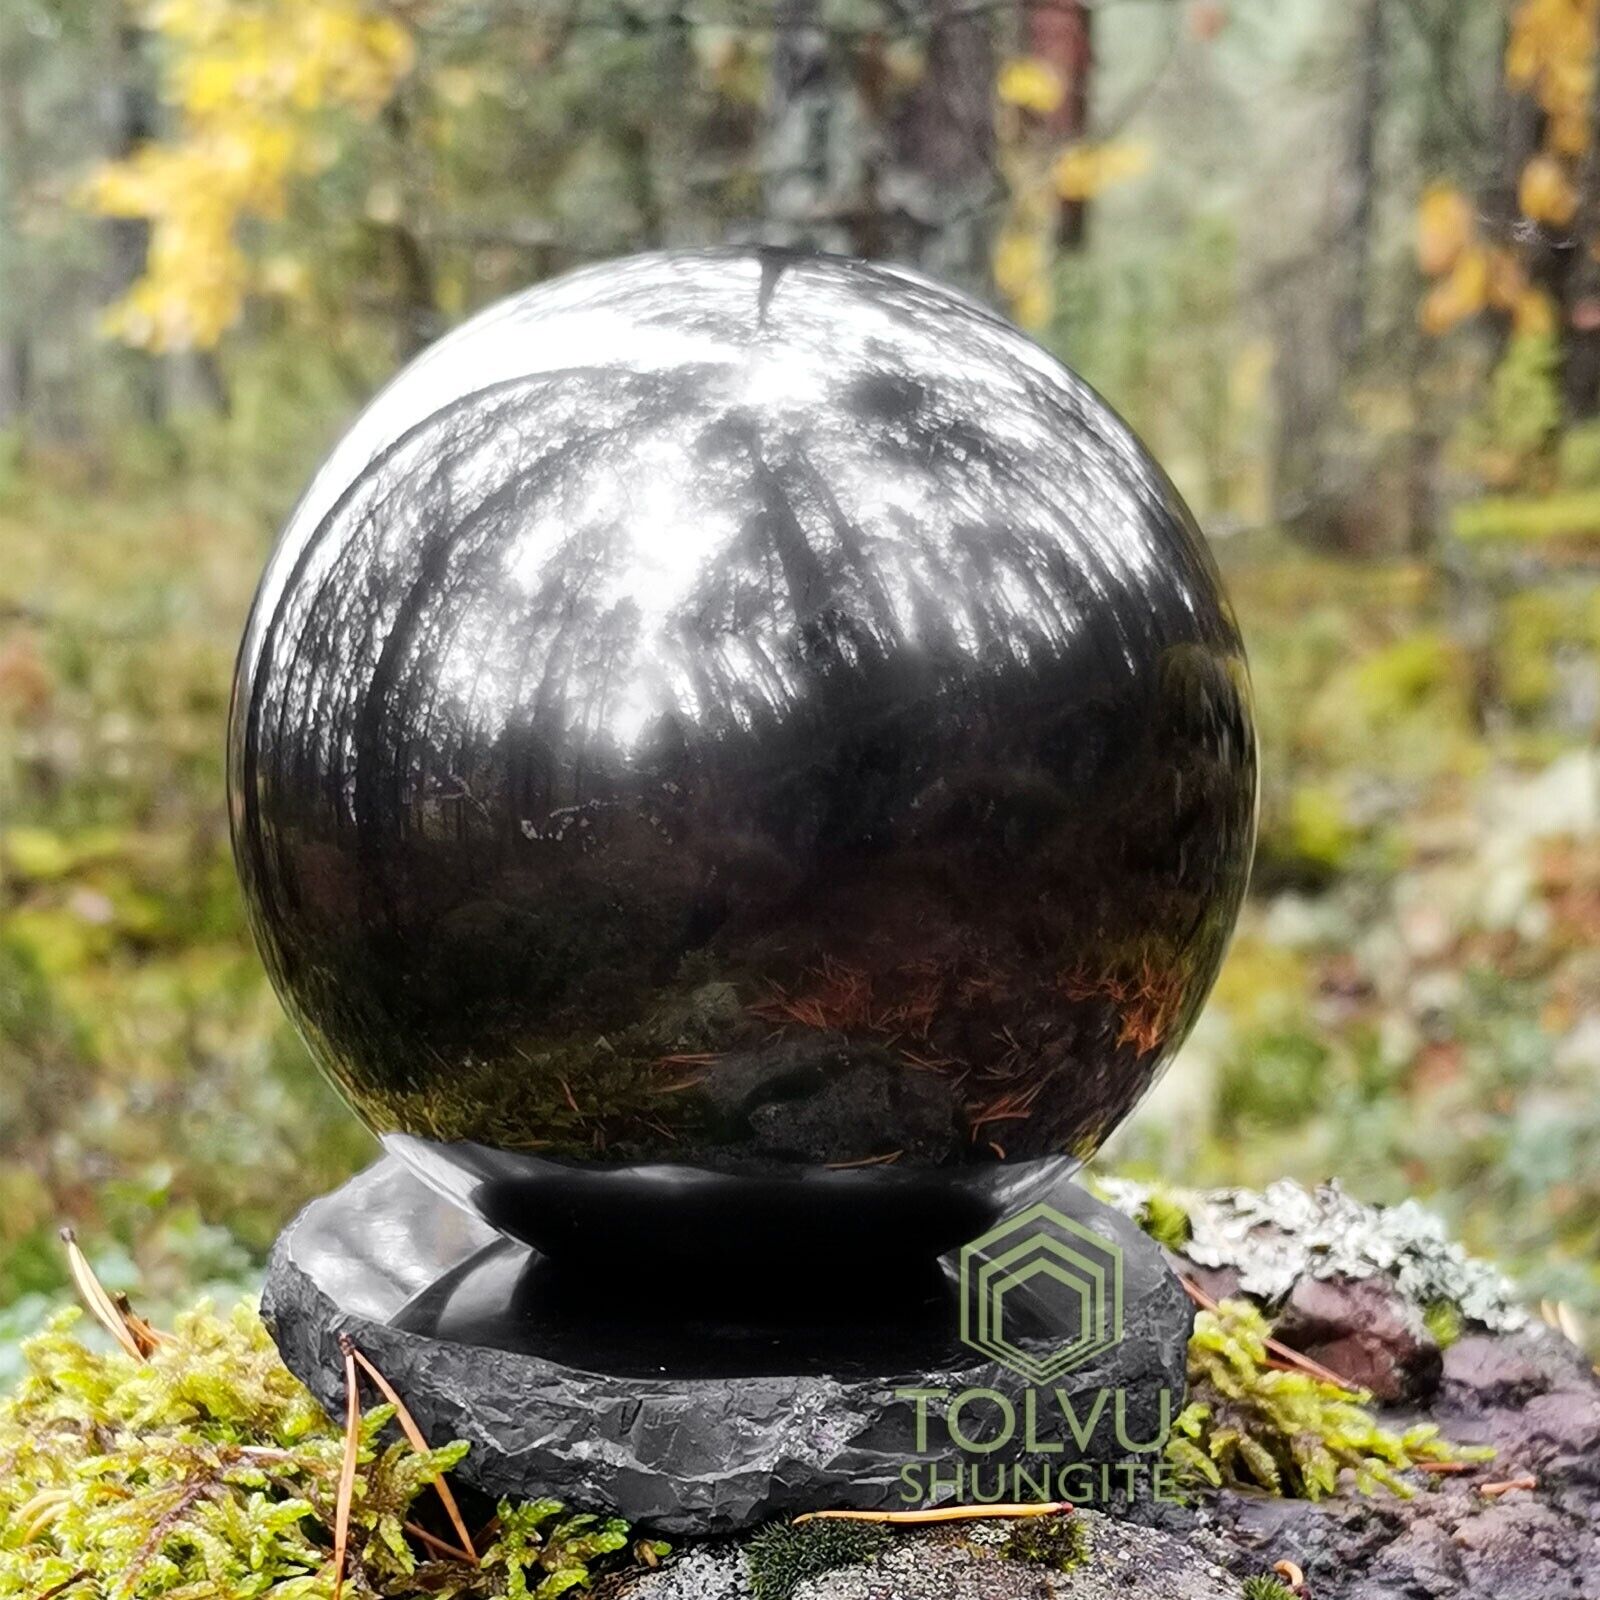 Shungite Crystal Sphere Big Size - 3.2 in. - Authentic shungite stone - Tolvu